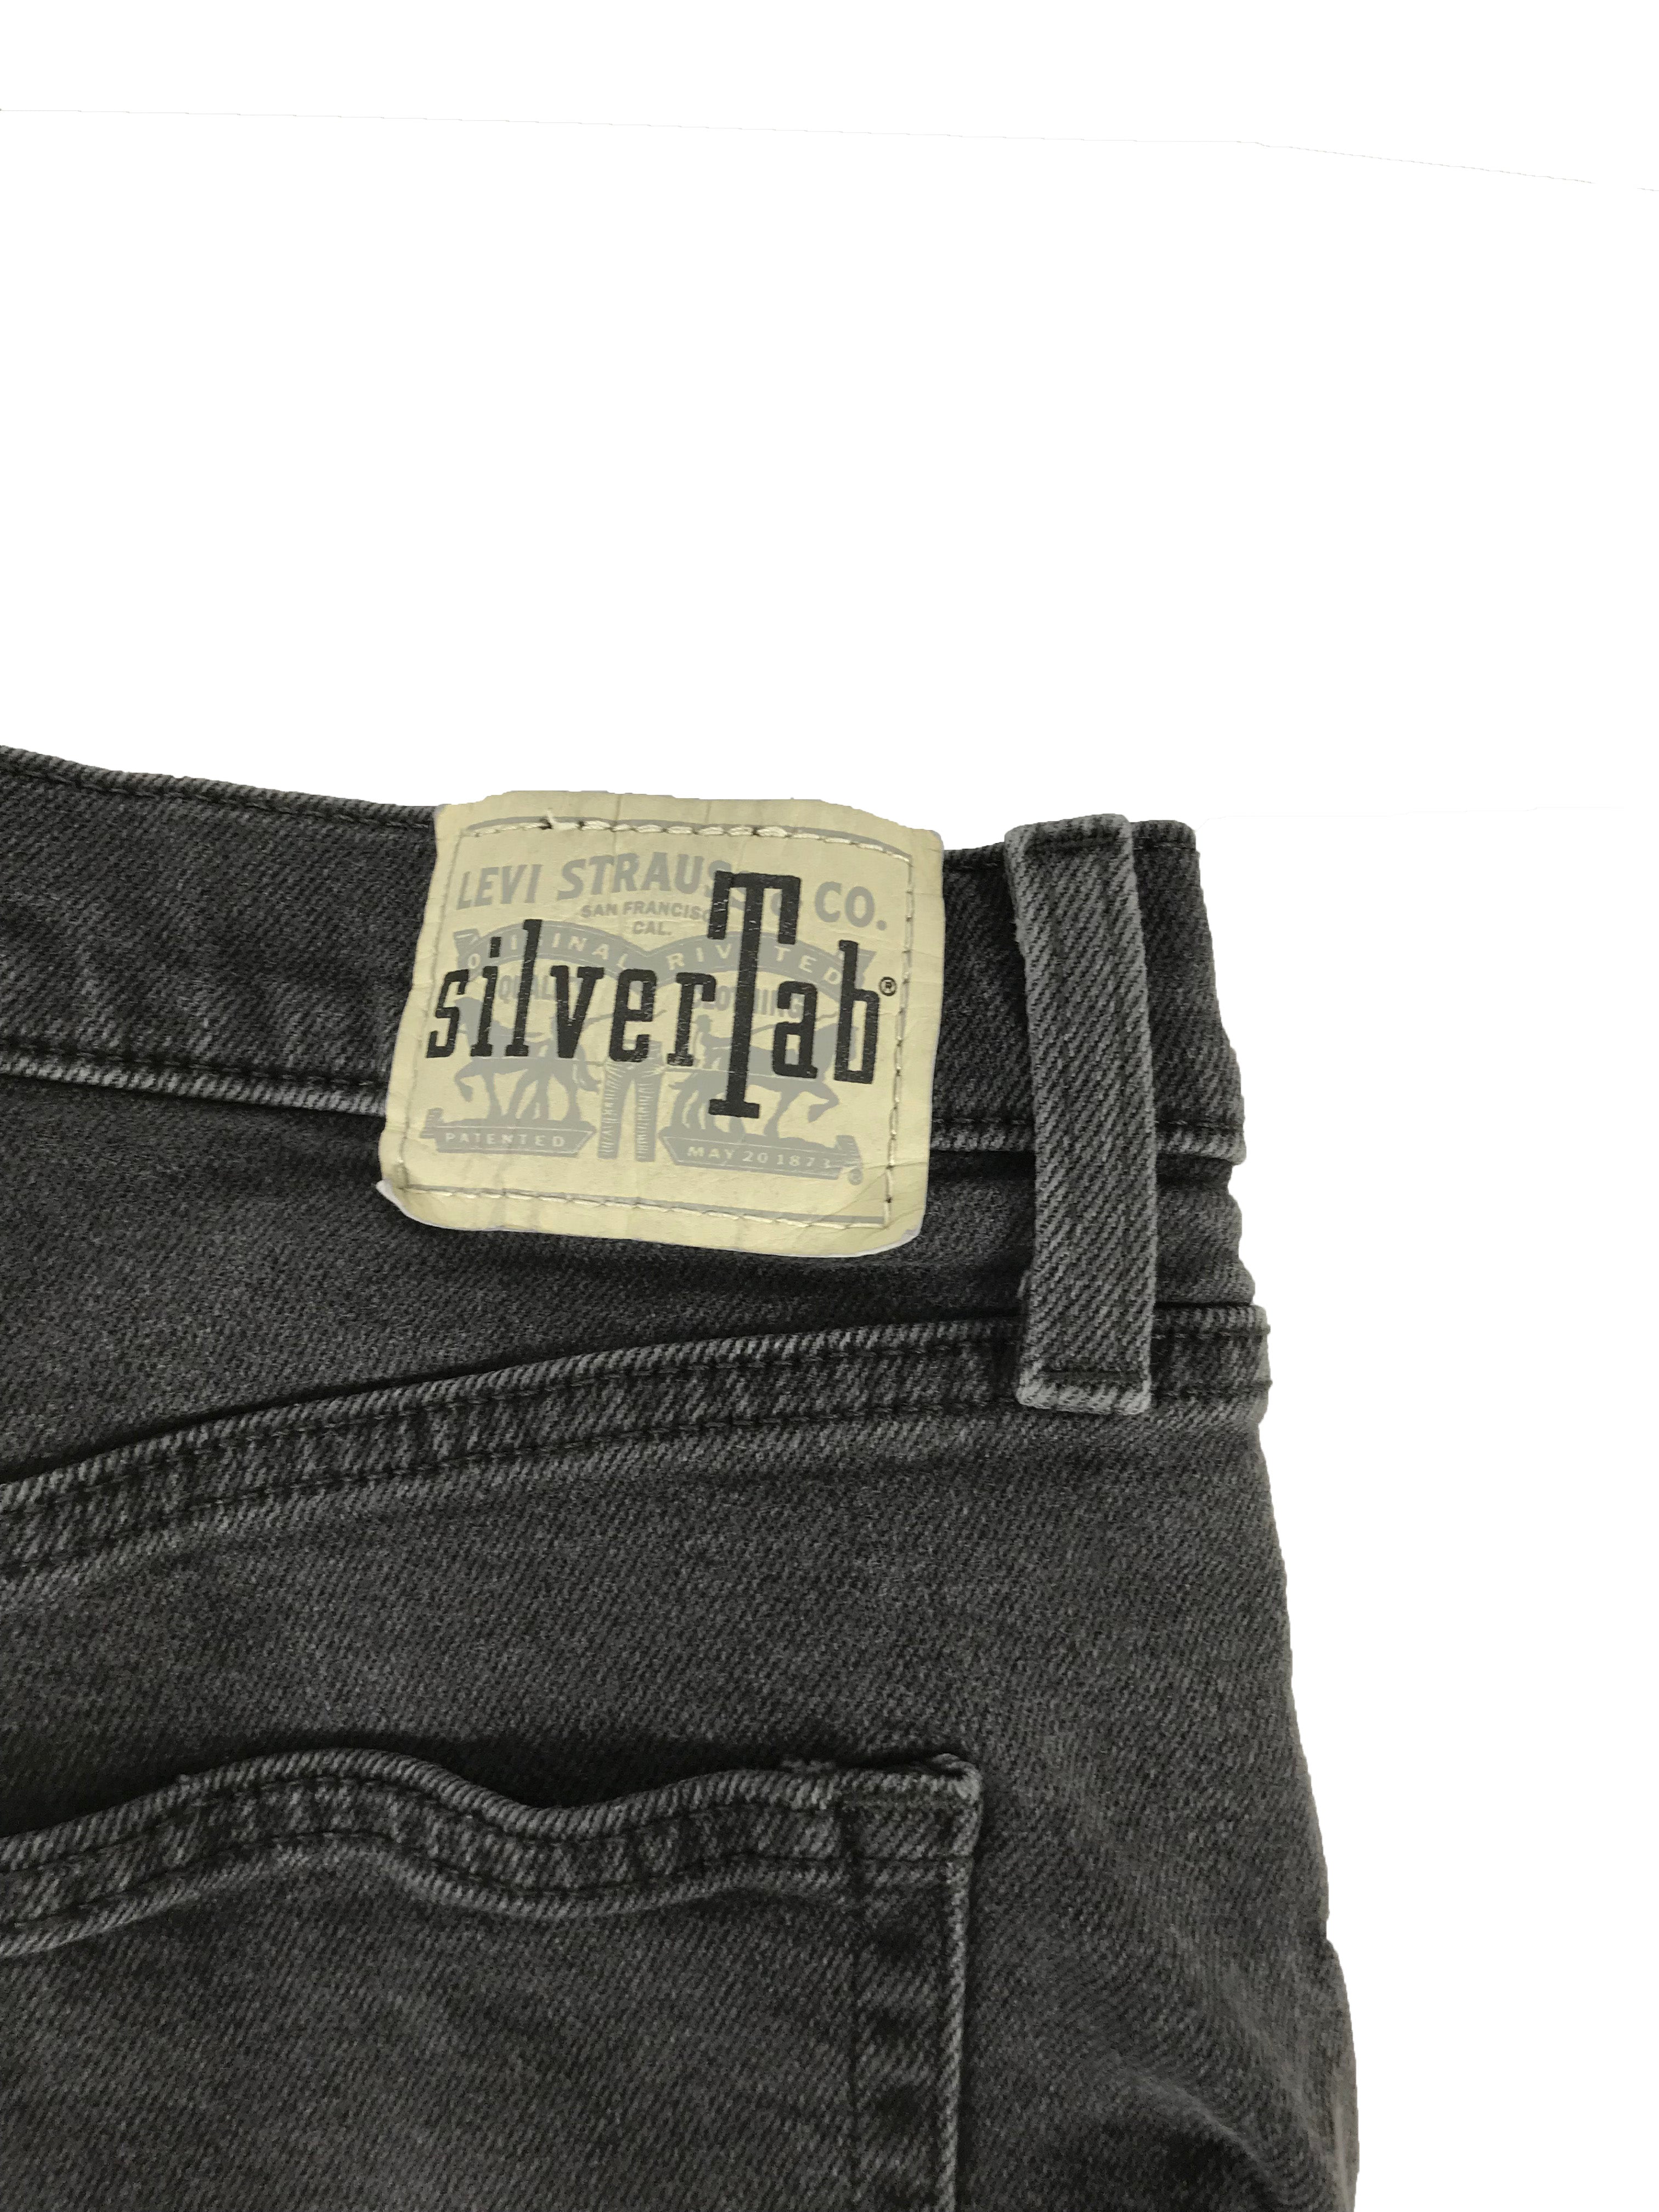 Levi's Black Silver Tab Mom Jeans Women's Size 32